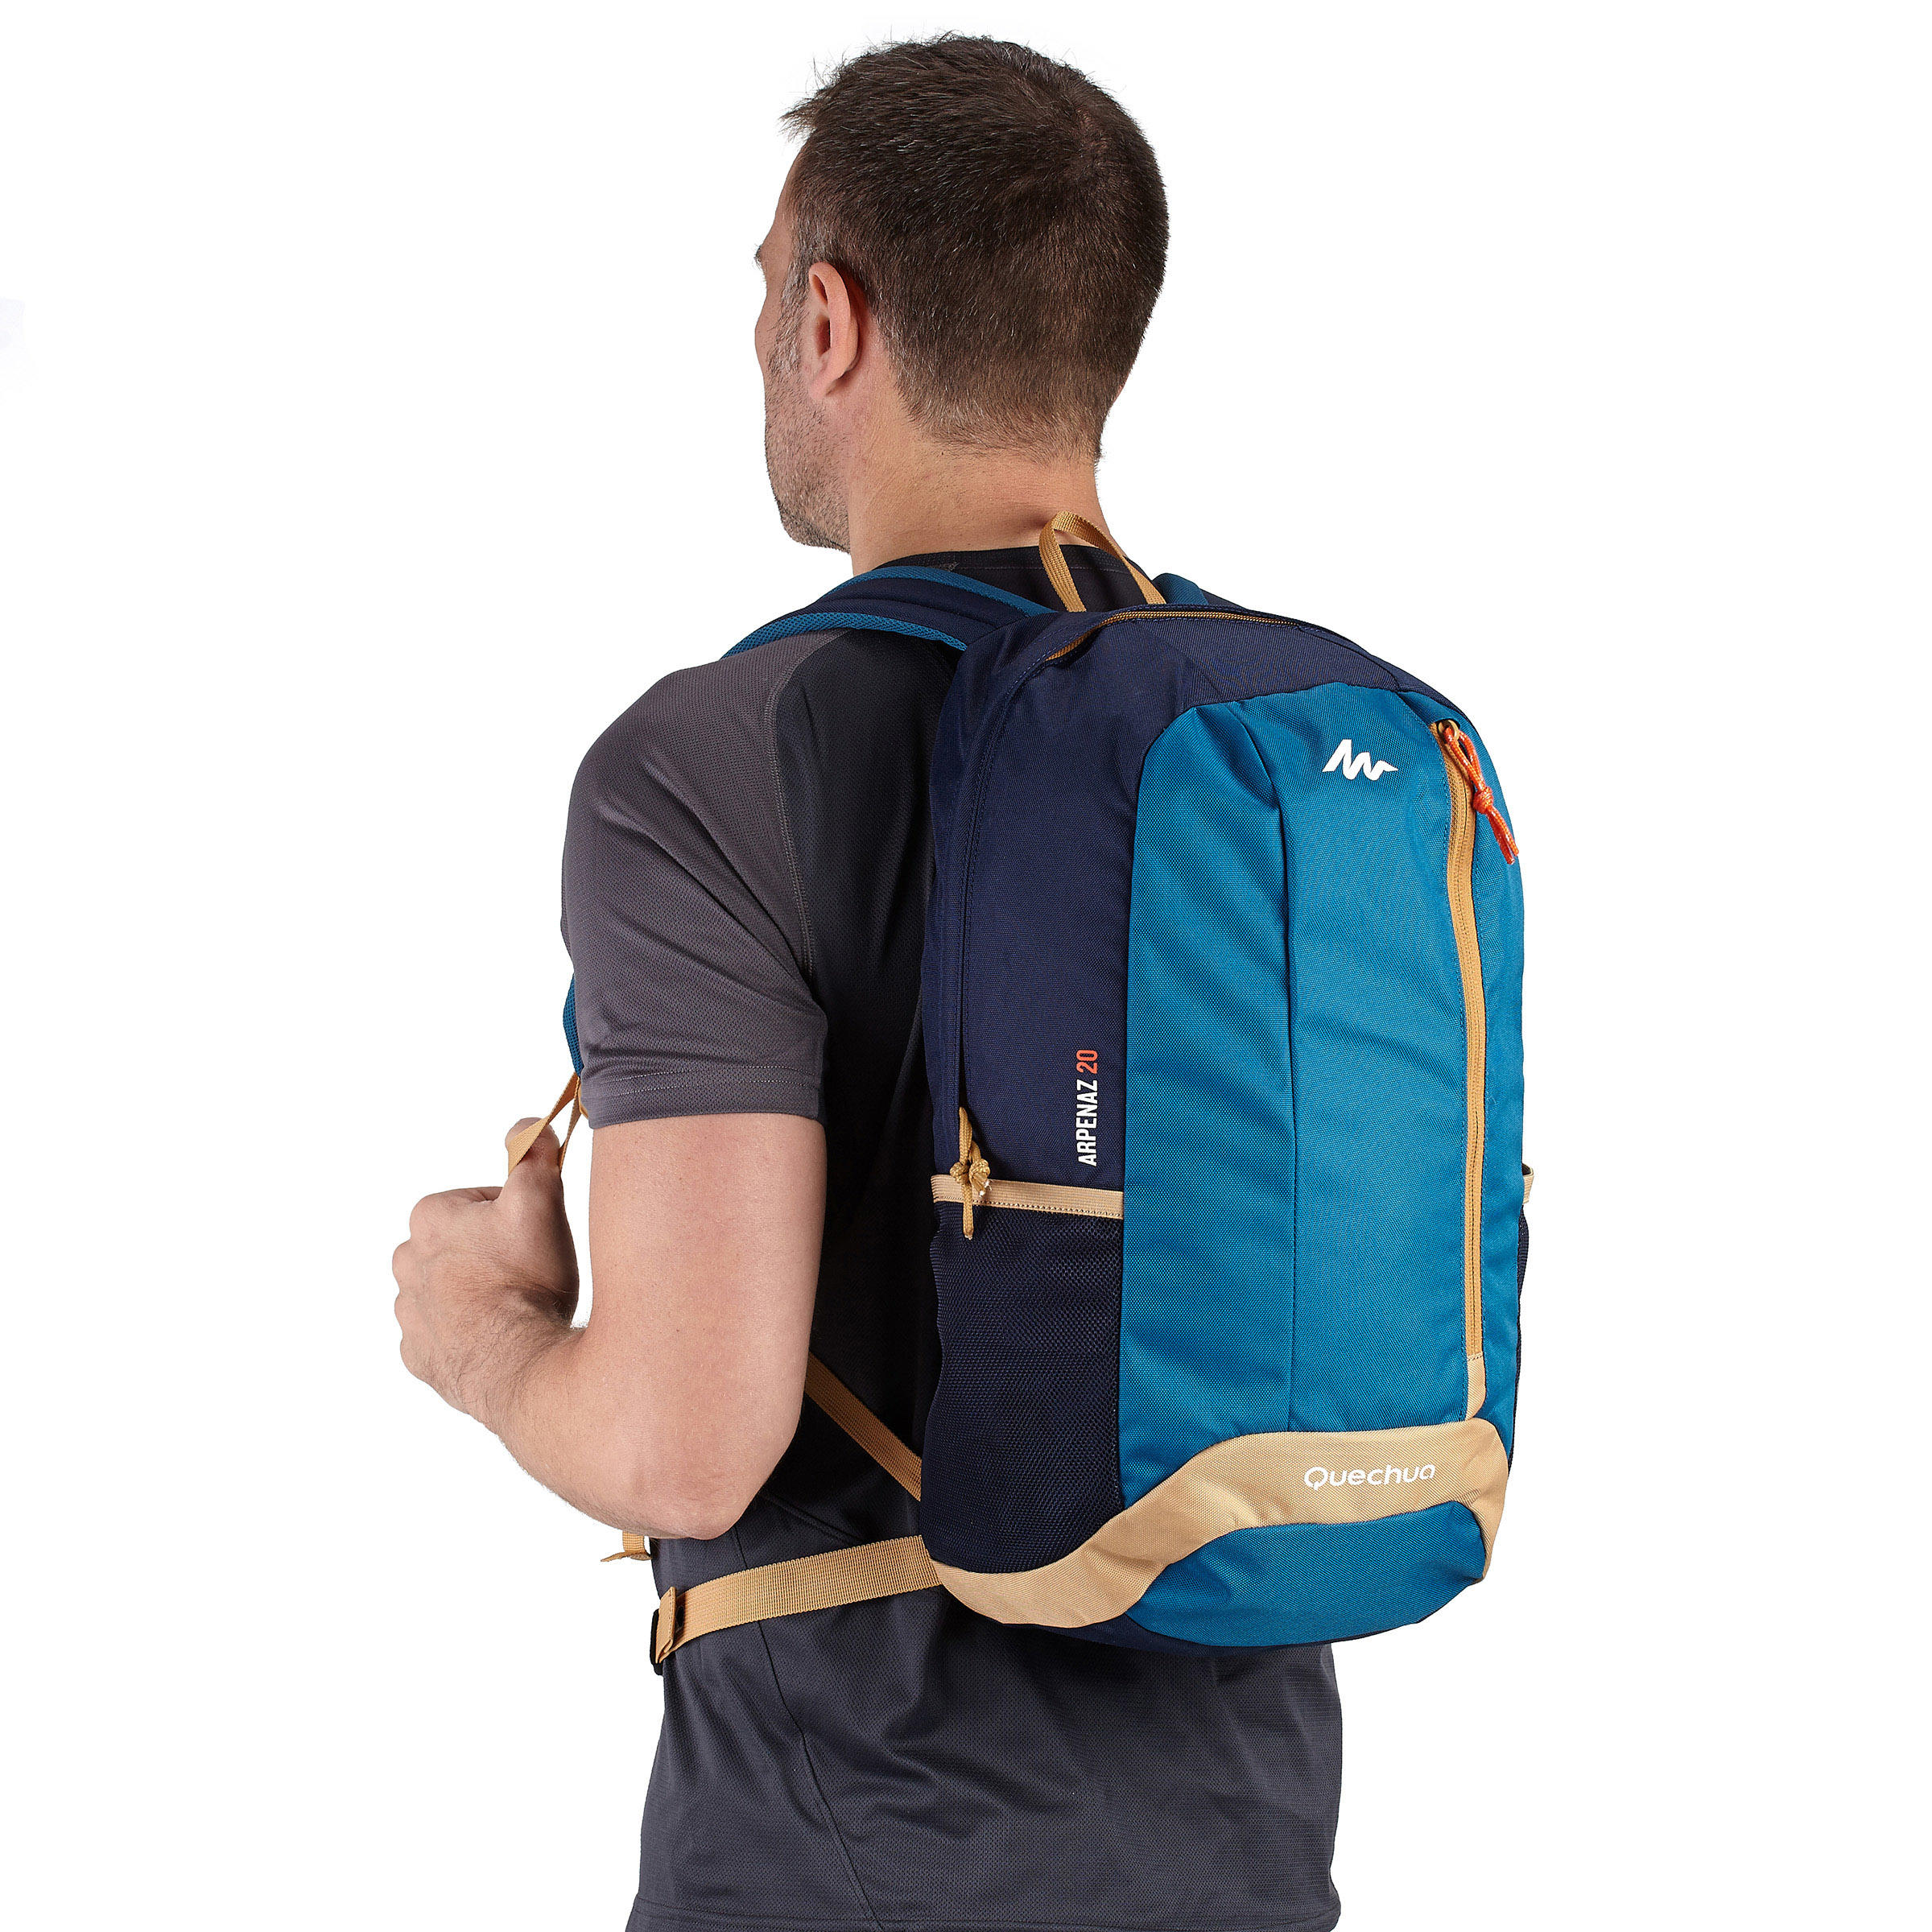 decathlon 20 litre backpack